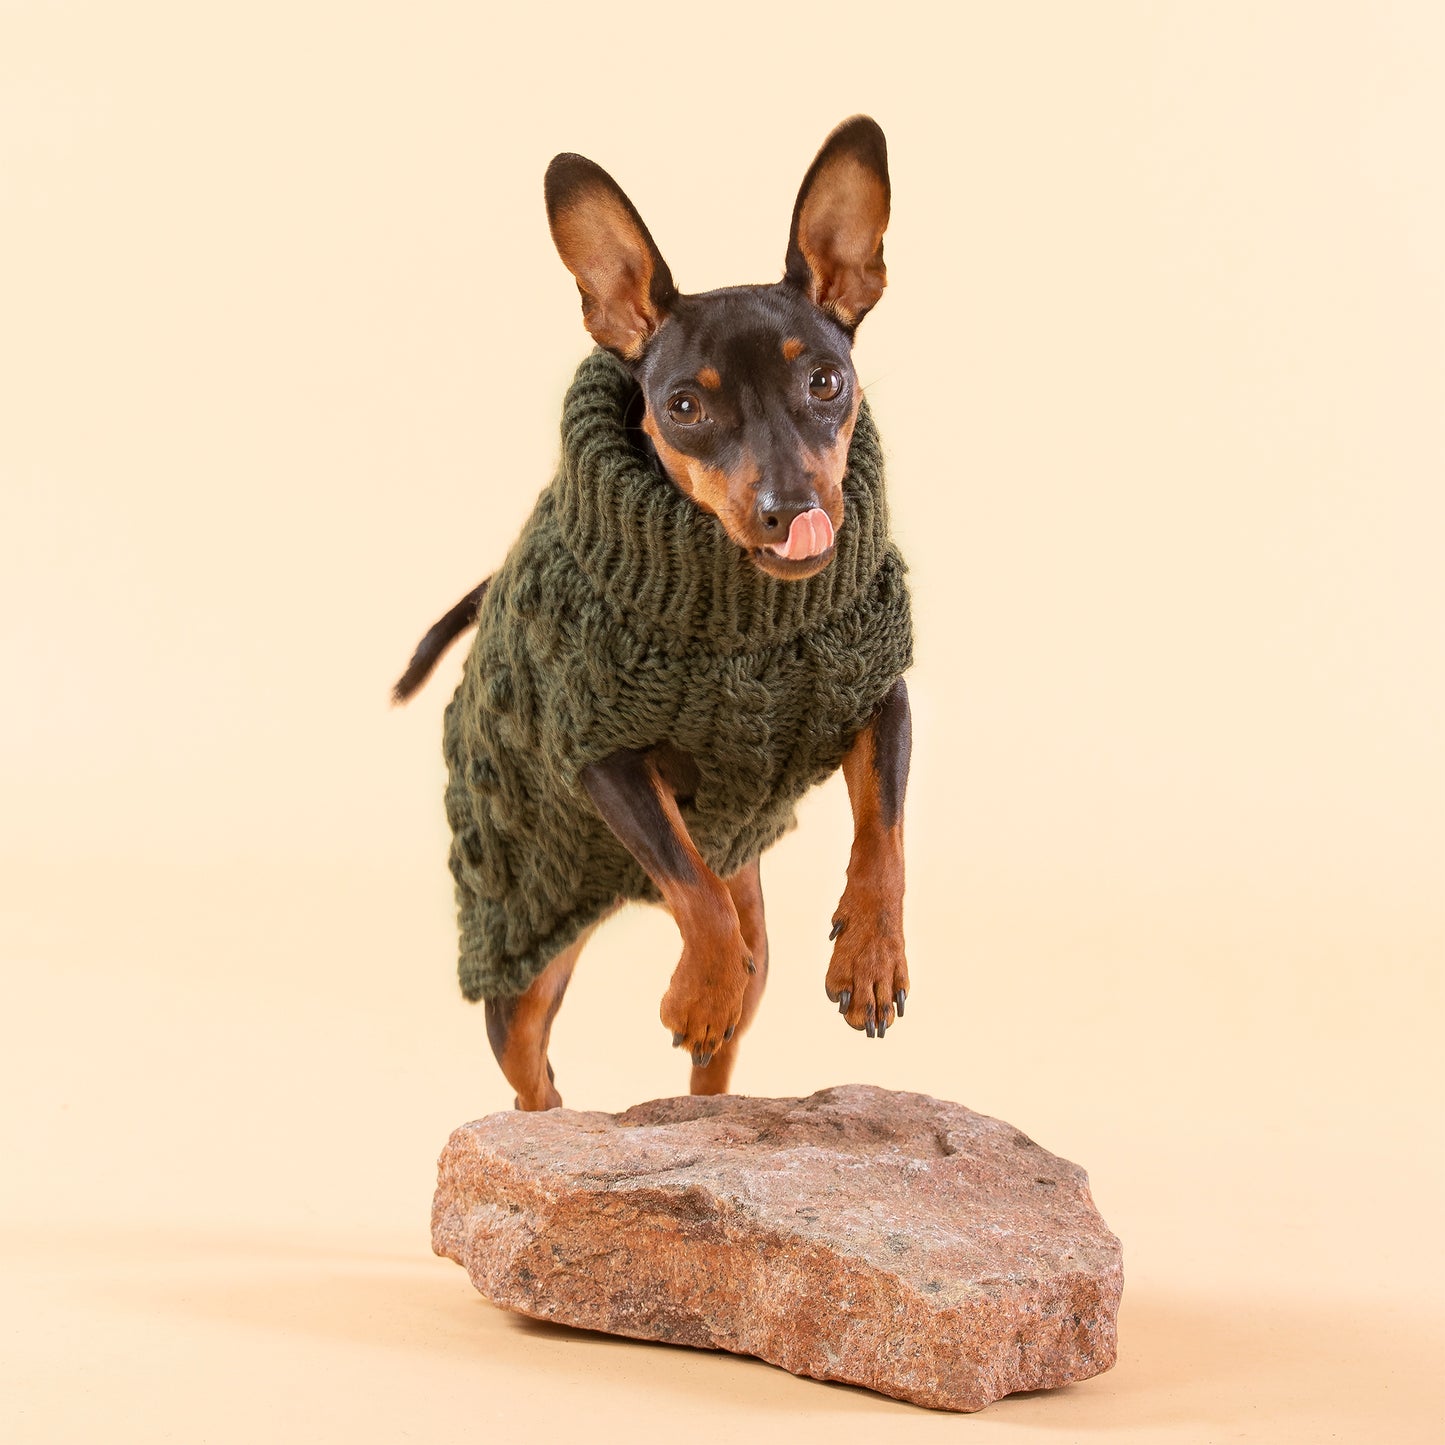 PAiKKA | Handgestrickter Pullover für Hunde | Handmade Knit Sweater for Dogs